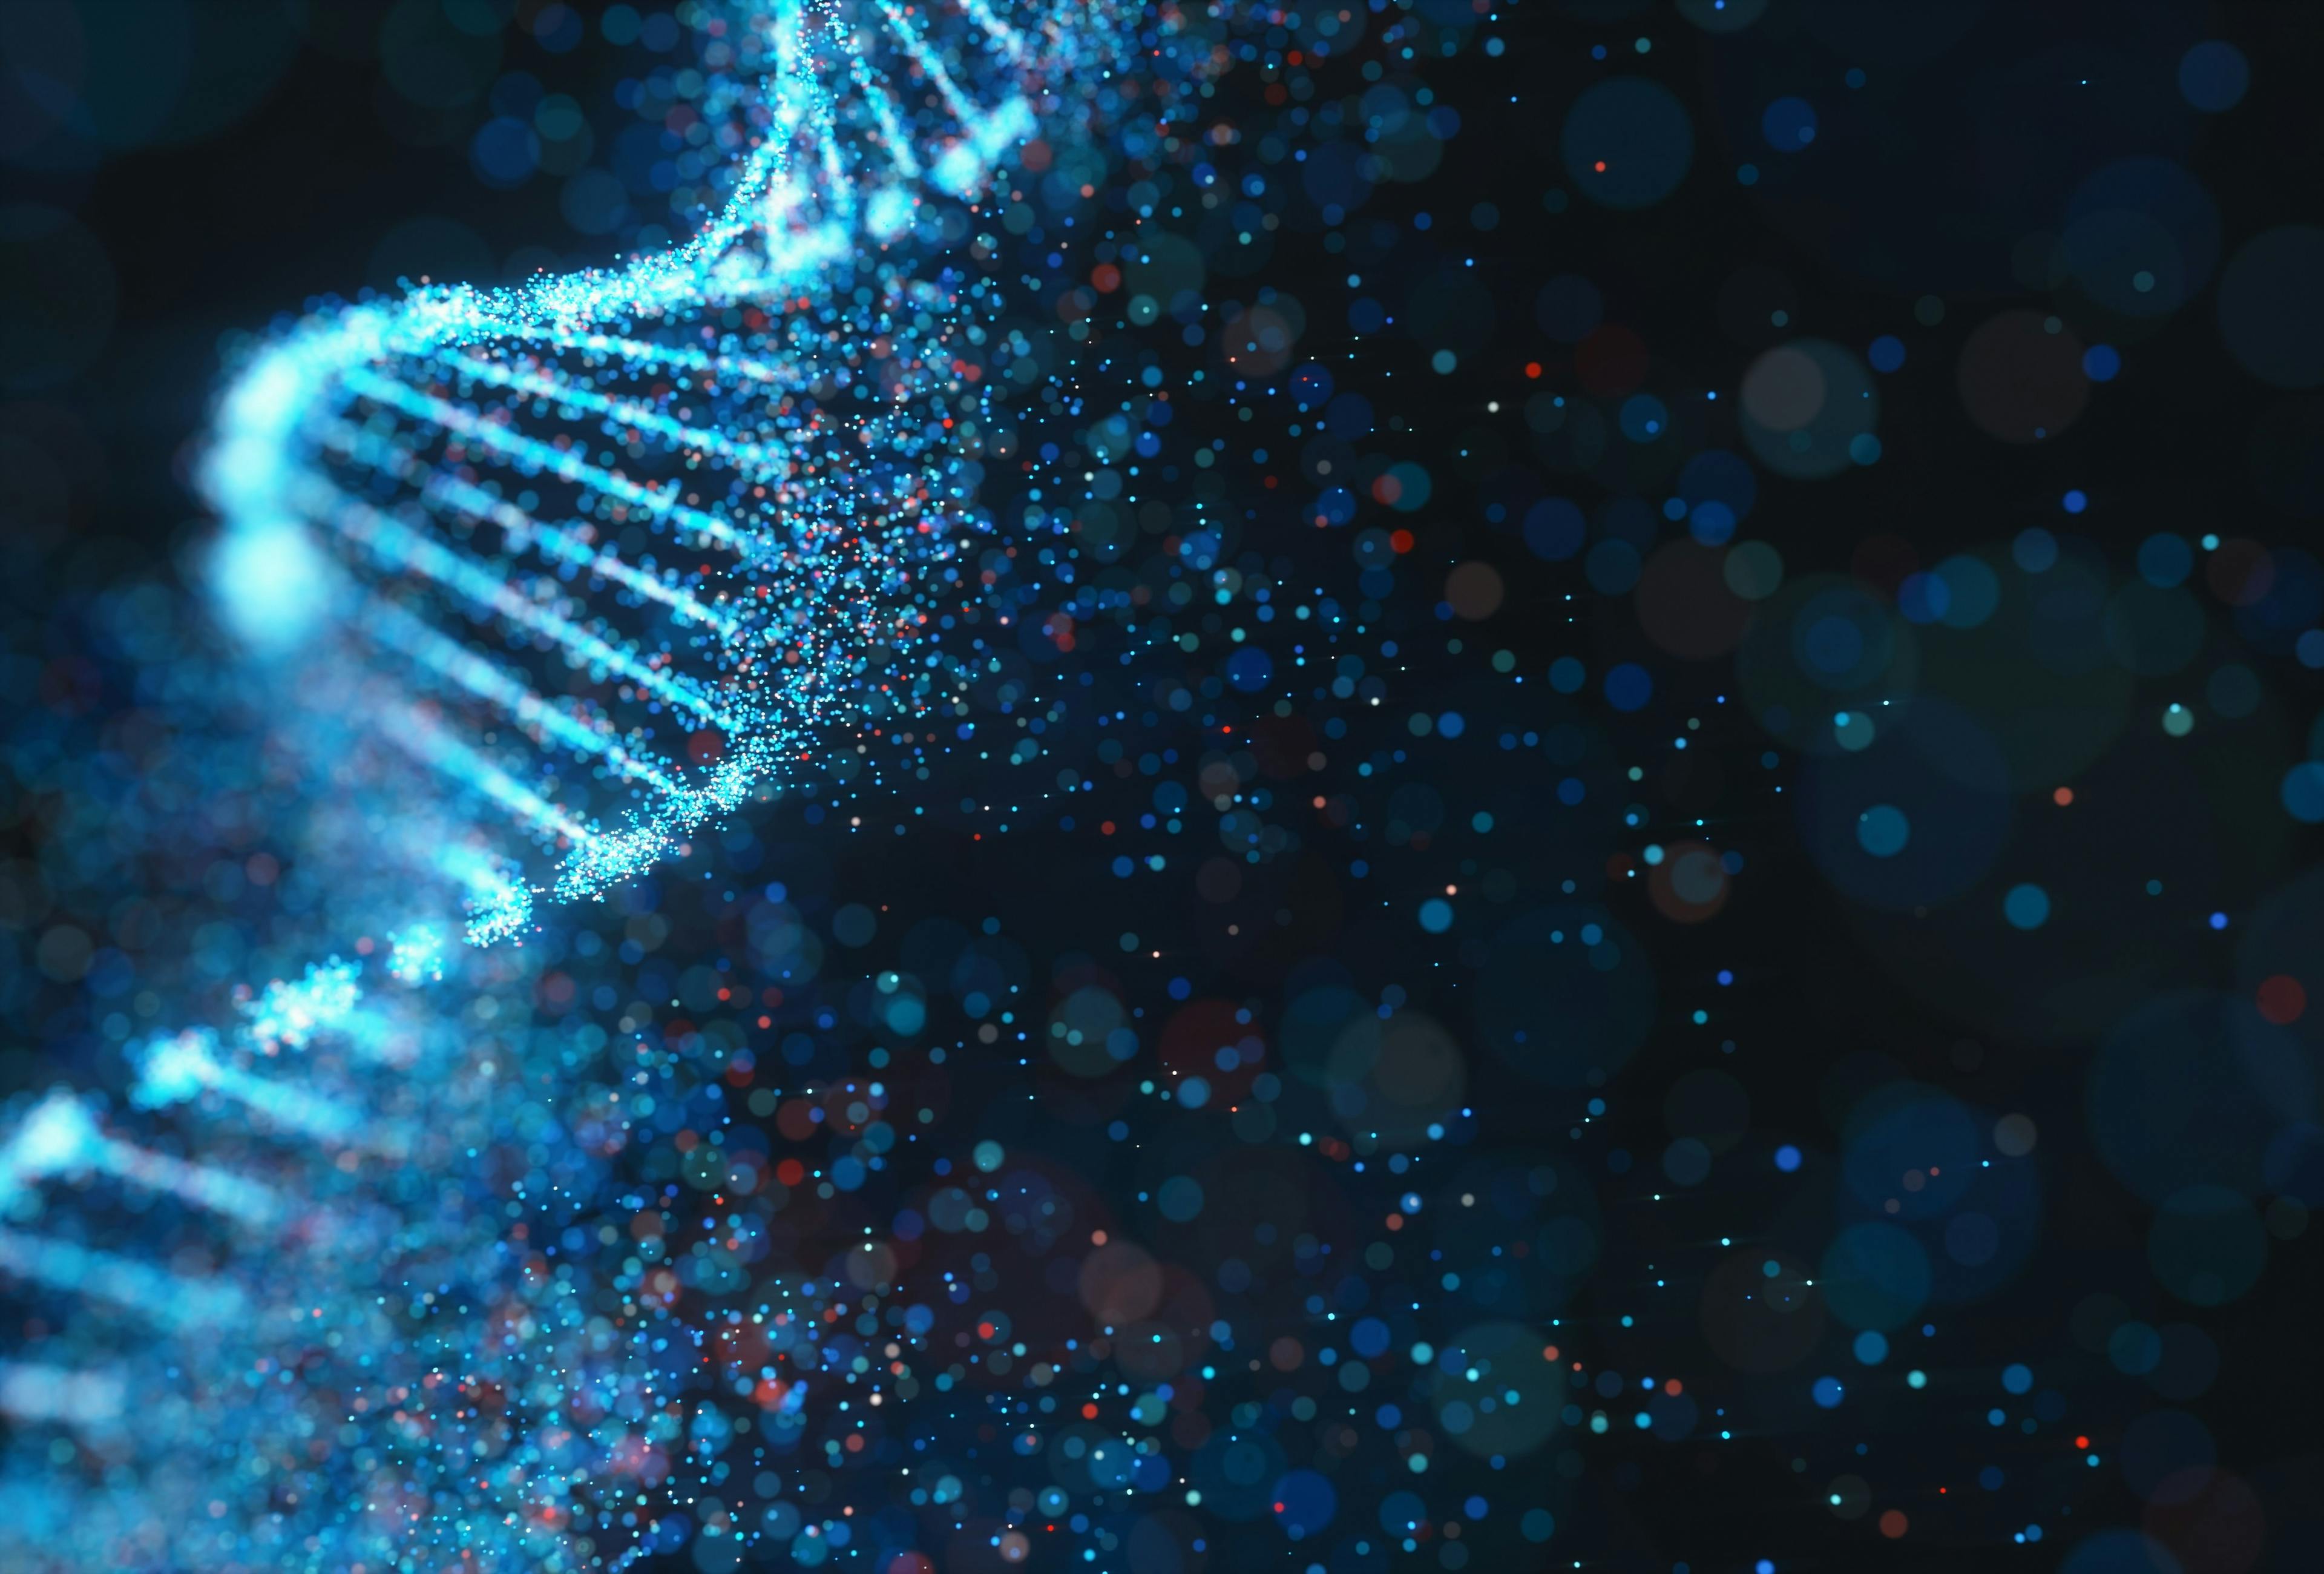 Colored Genetic Code DNA Molecule Structure | | Image Credit: © ktsdesign - www.stock.adobe.com